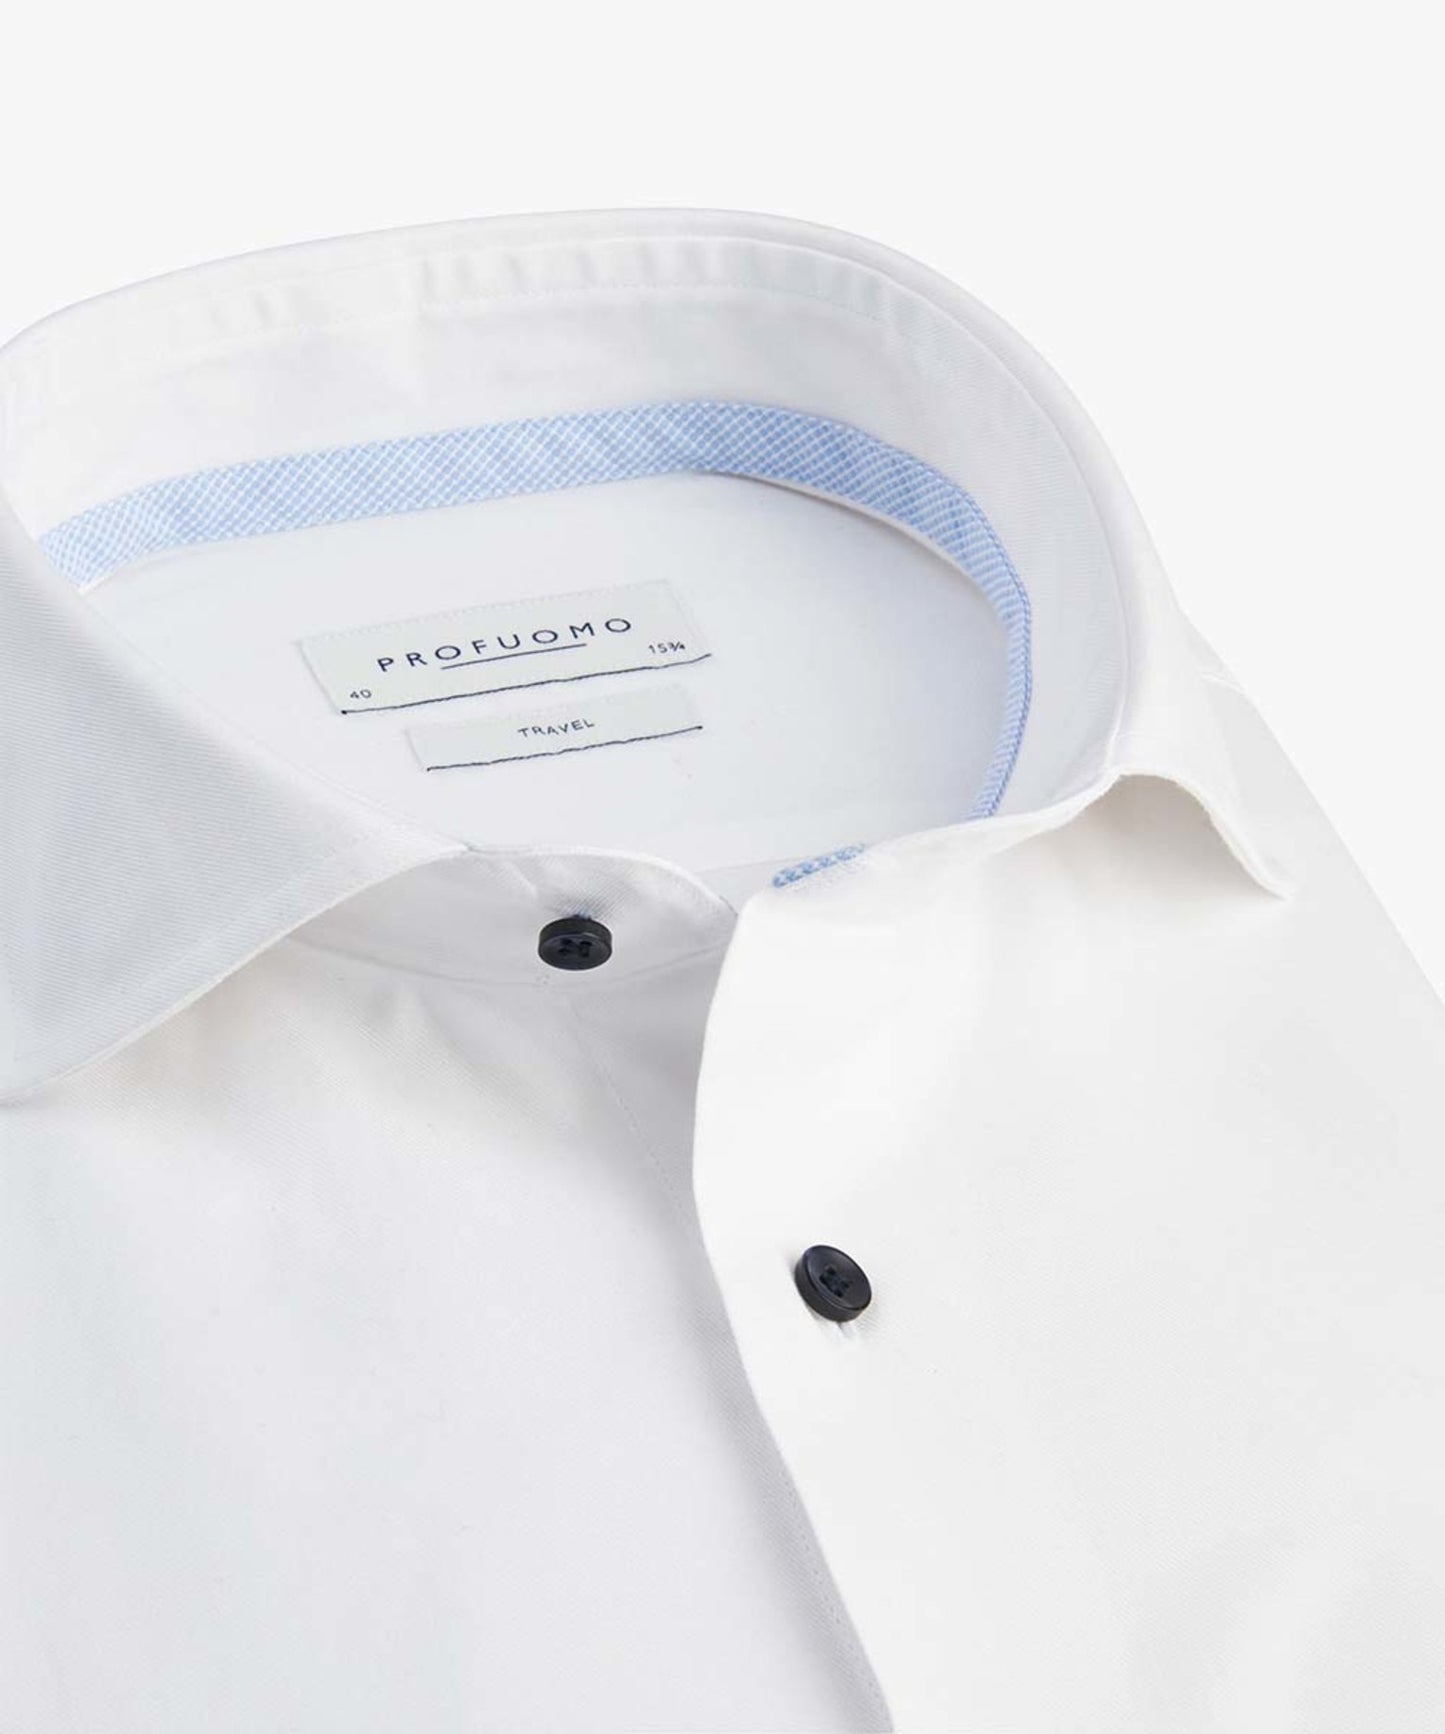 White cotton slim fit shirt Profuomo - PPUH30017A